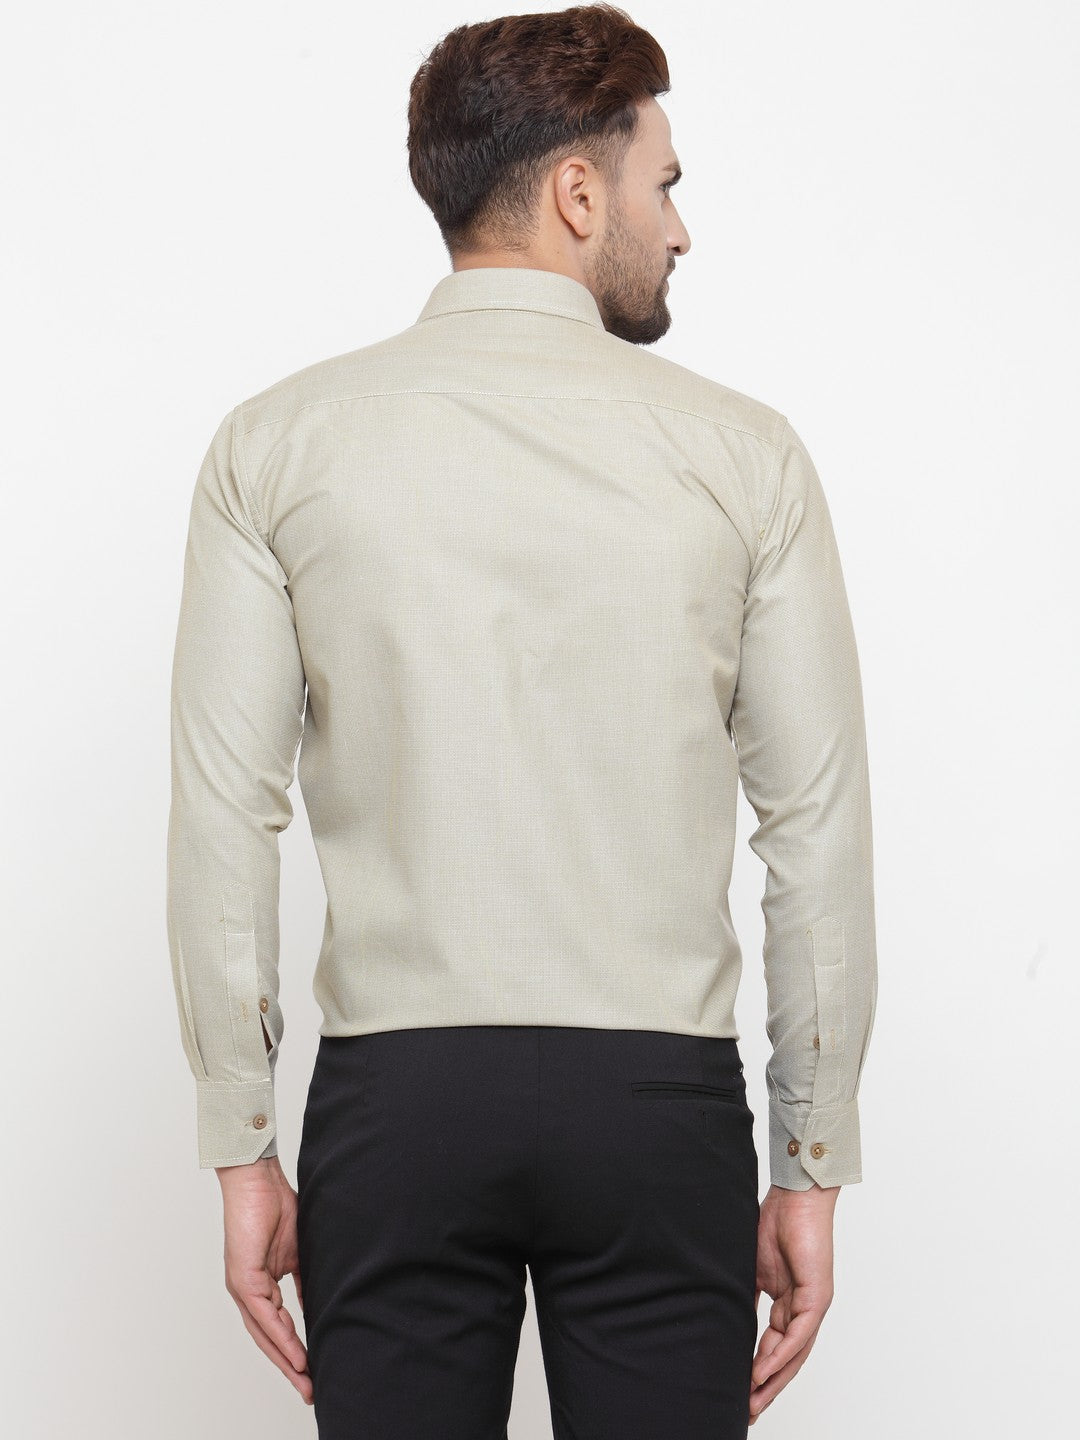 Men's Olive Cotton Geometric Formal Shirts ( SF 434Olive ) - Jainish